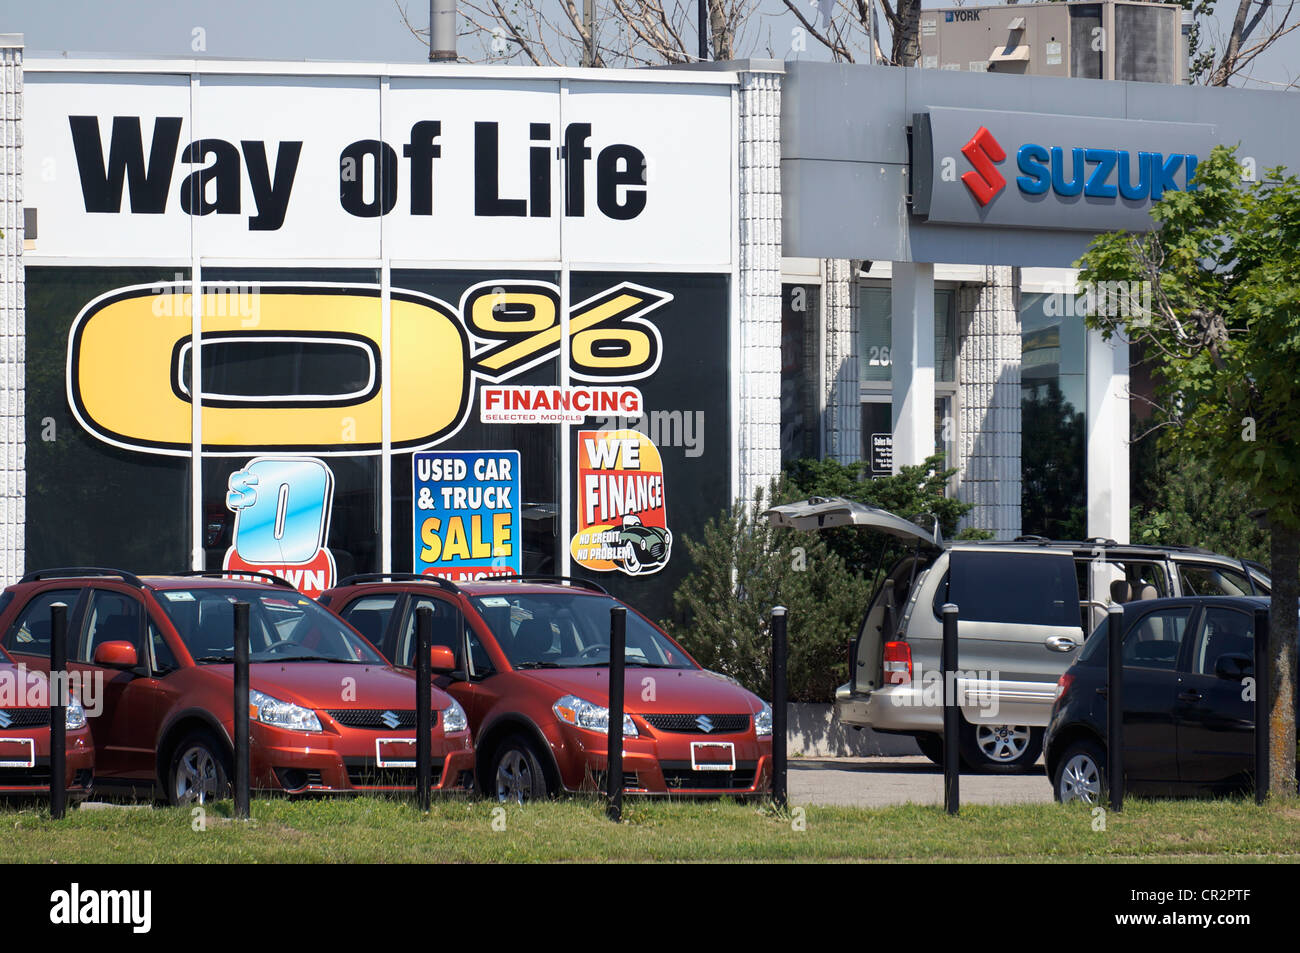 0% Financing sign, Zero Percent Financing sign, Suzuki Dealership Stock Photo